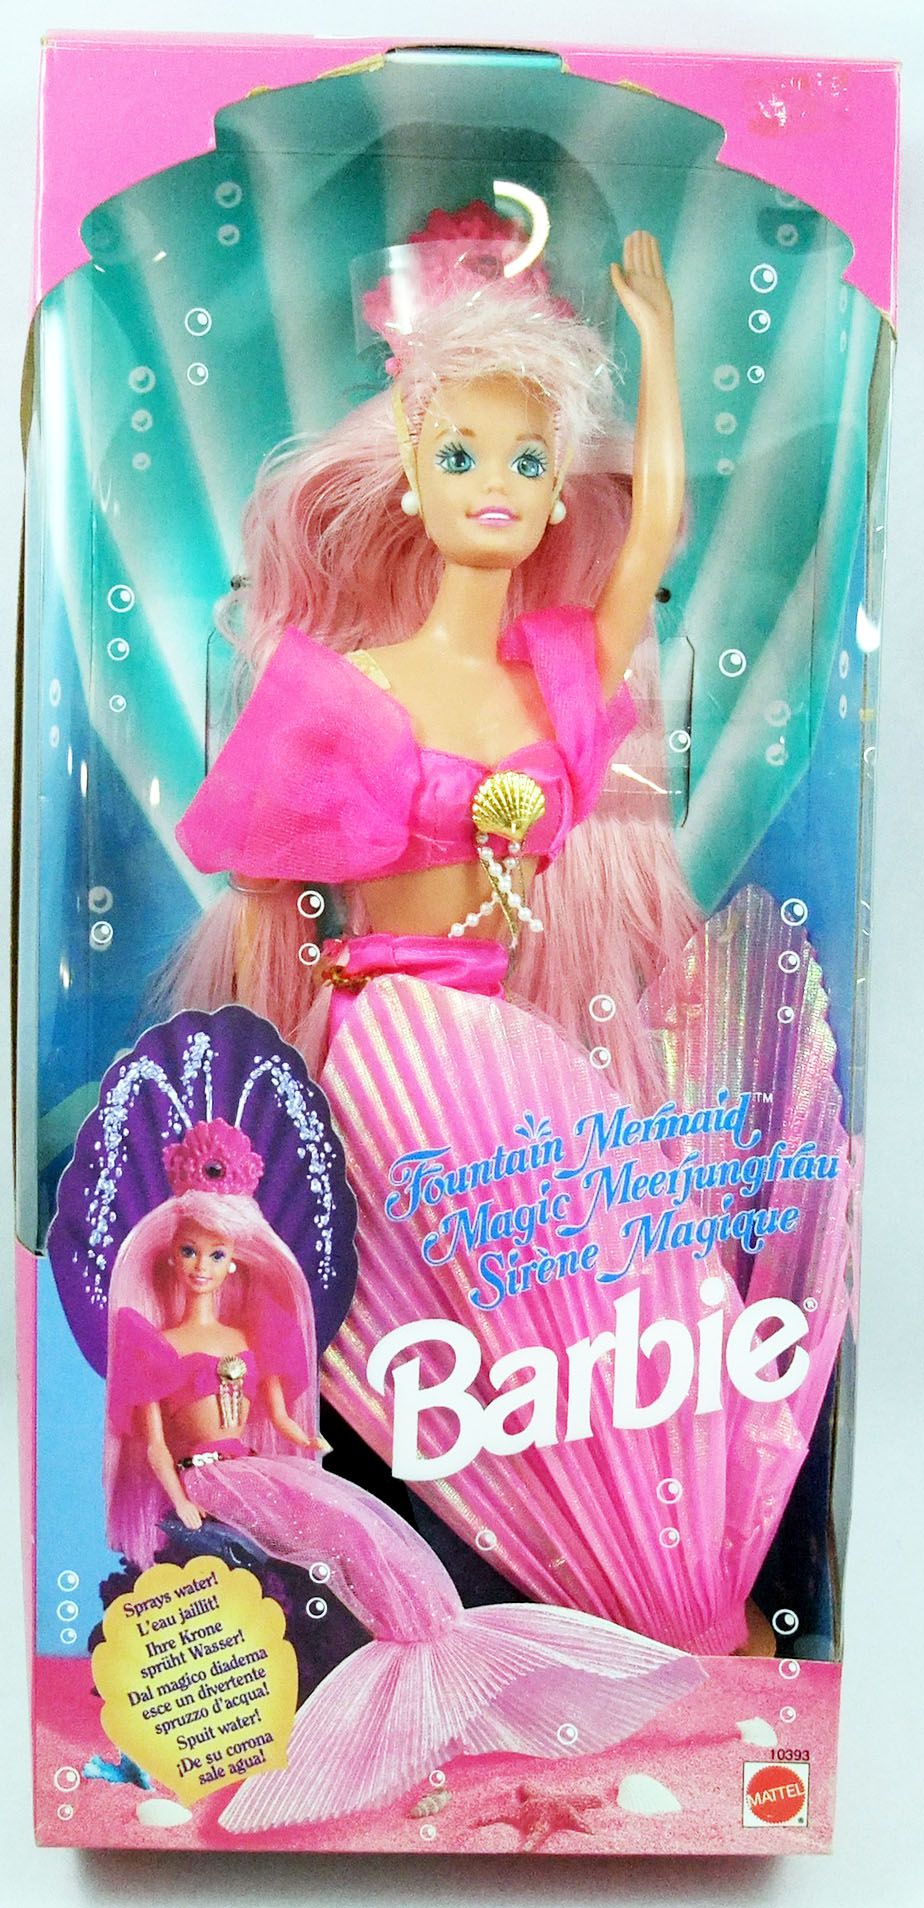 Fountain Mermaid Barbie - Mattel 1993 